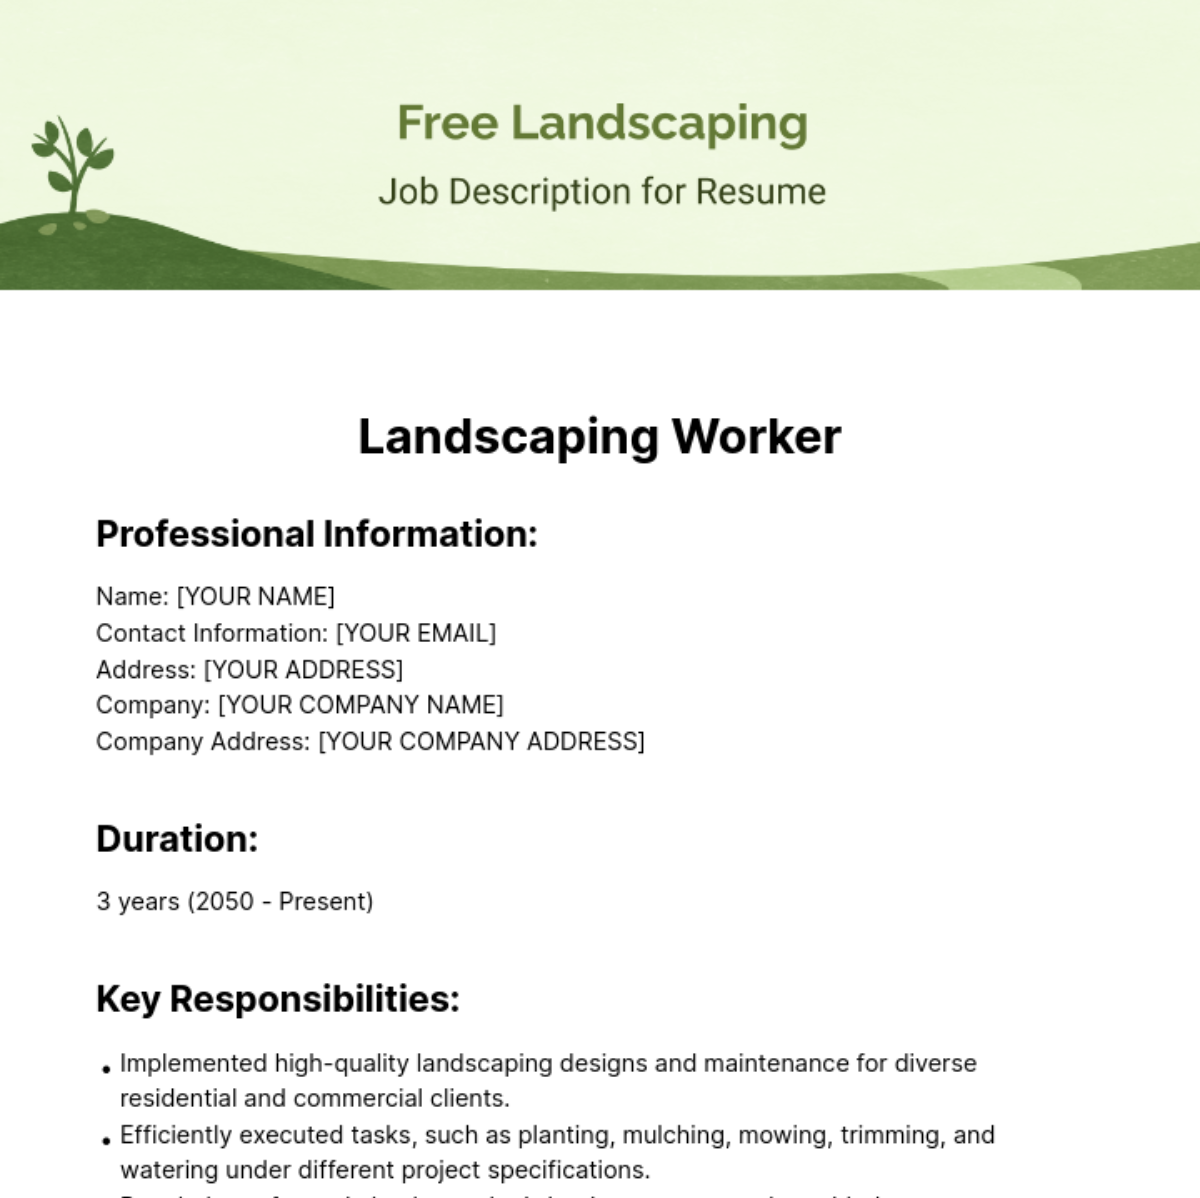 Landscaping Job Description for Resume Template